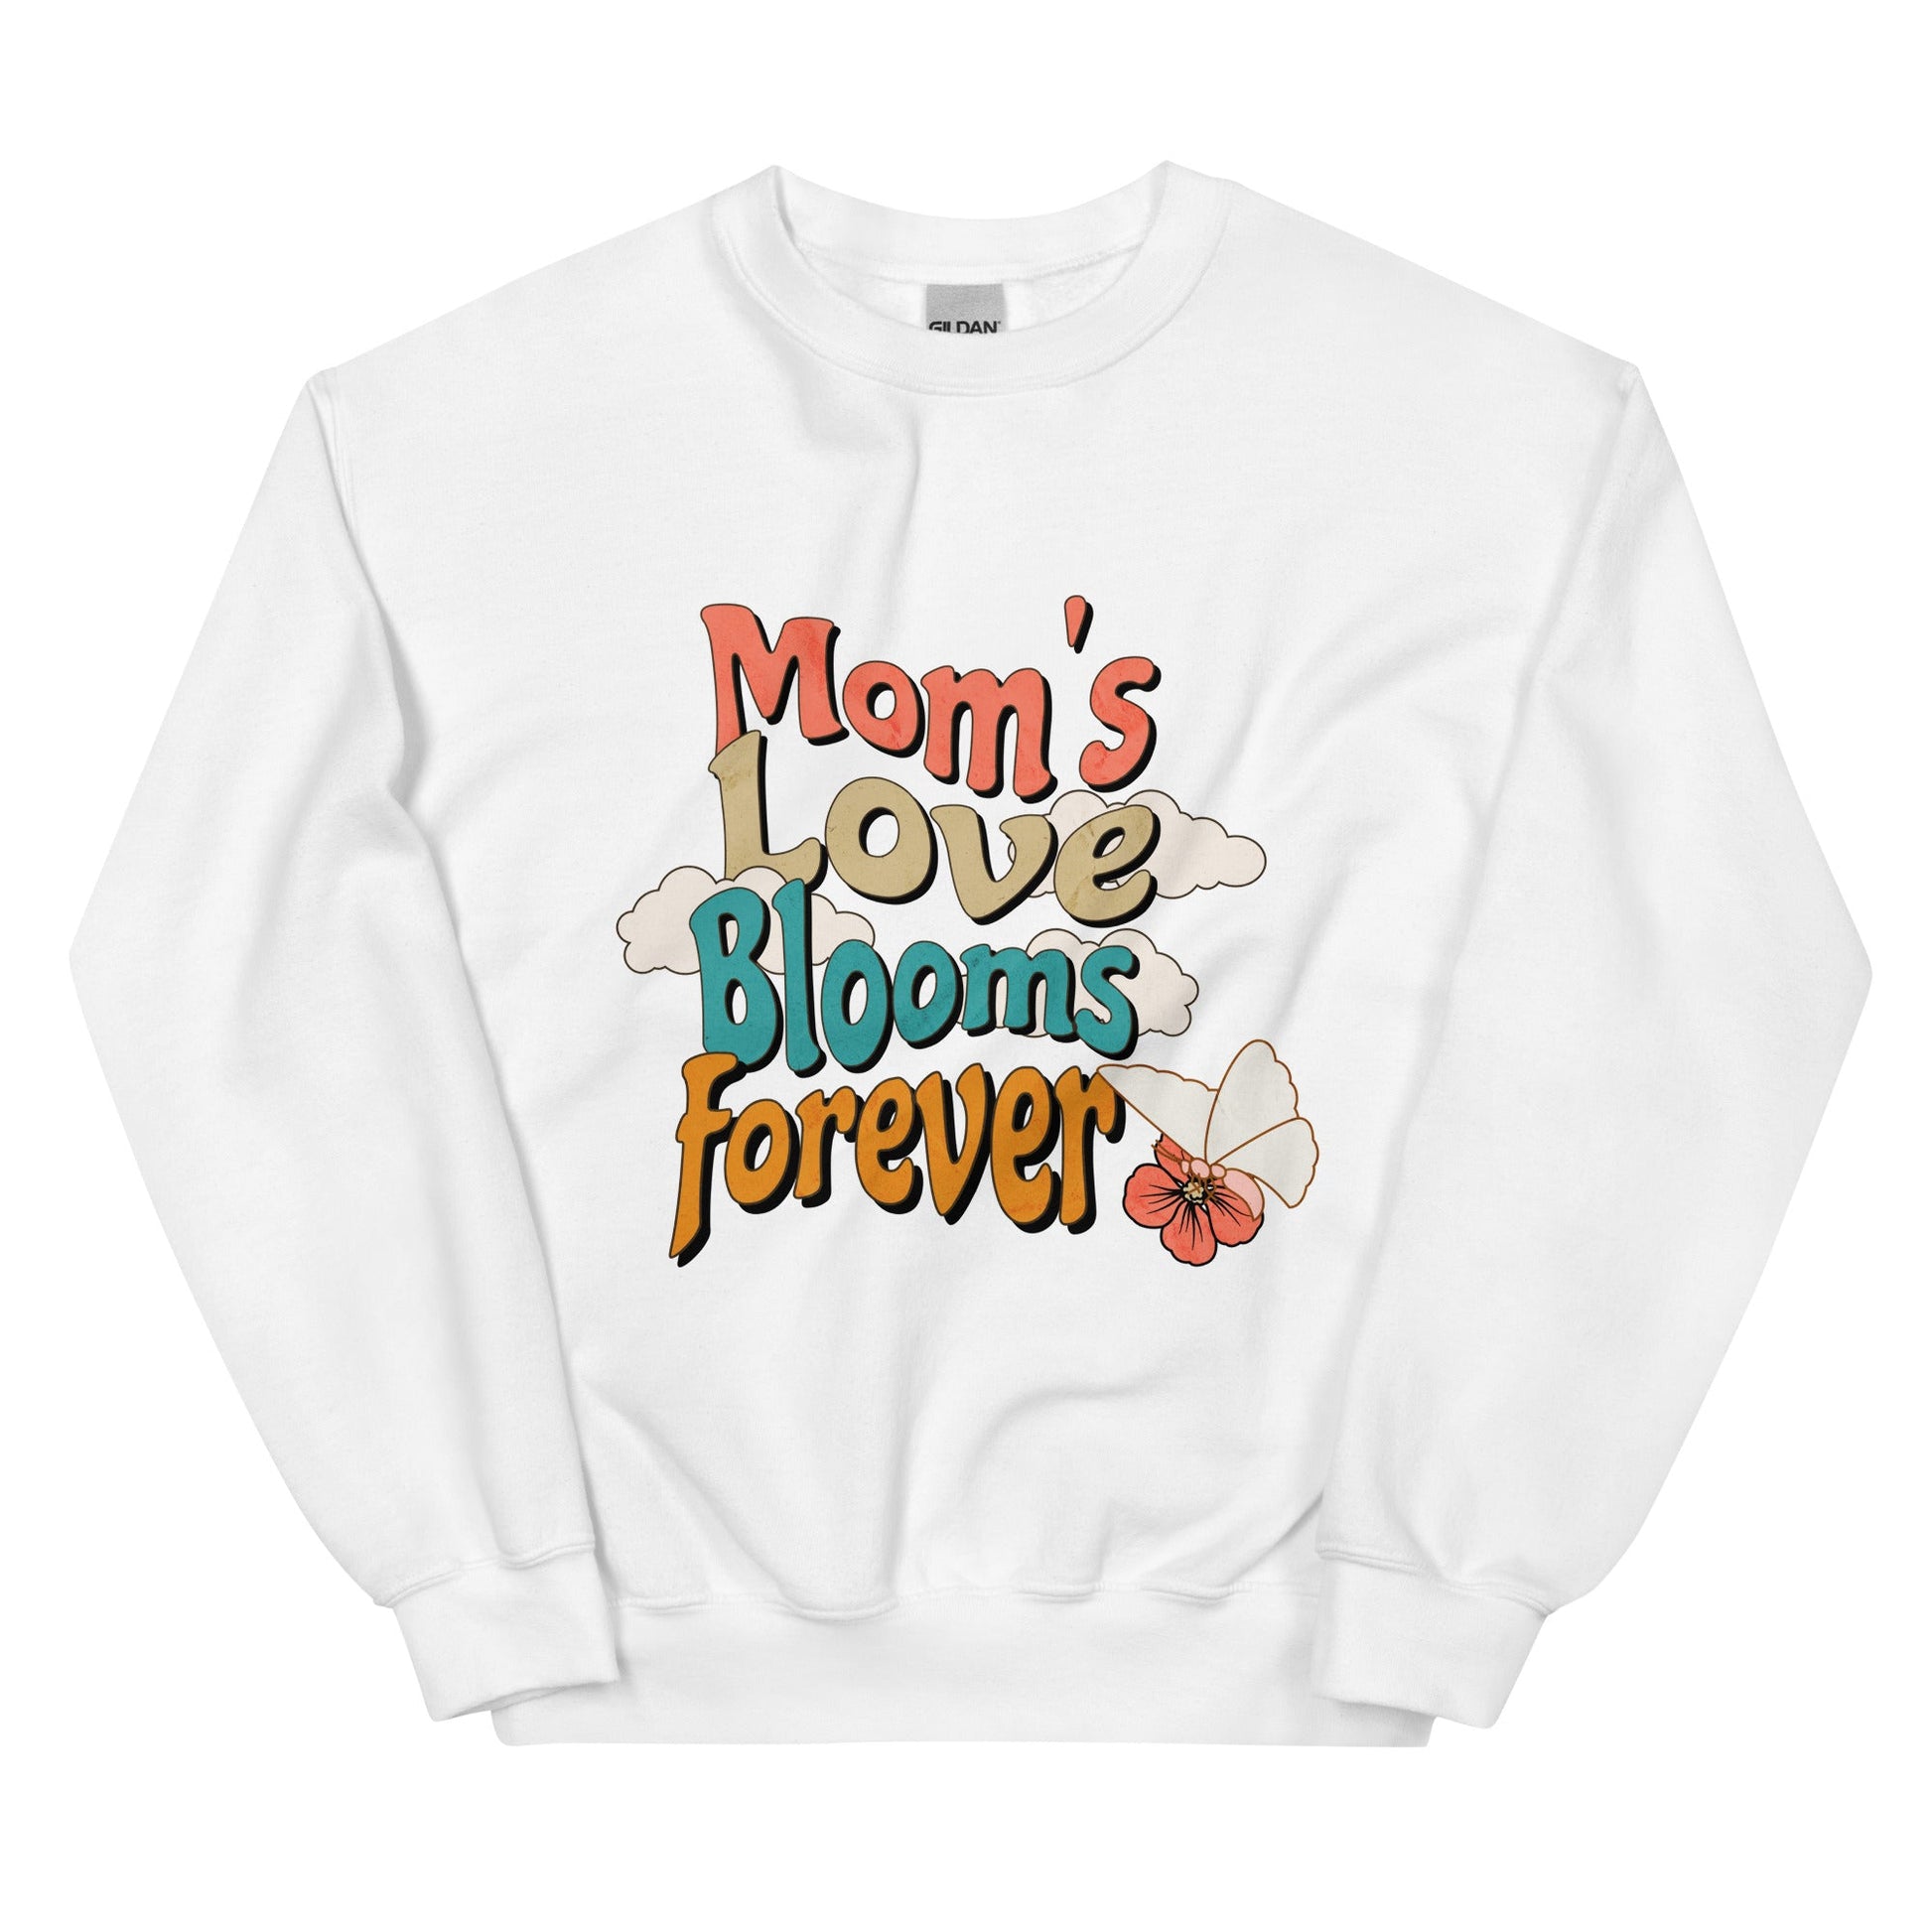 Mom's Love Blooms Forever Sweatshirt-White-S-mysticalcherry